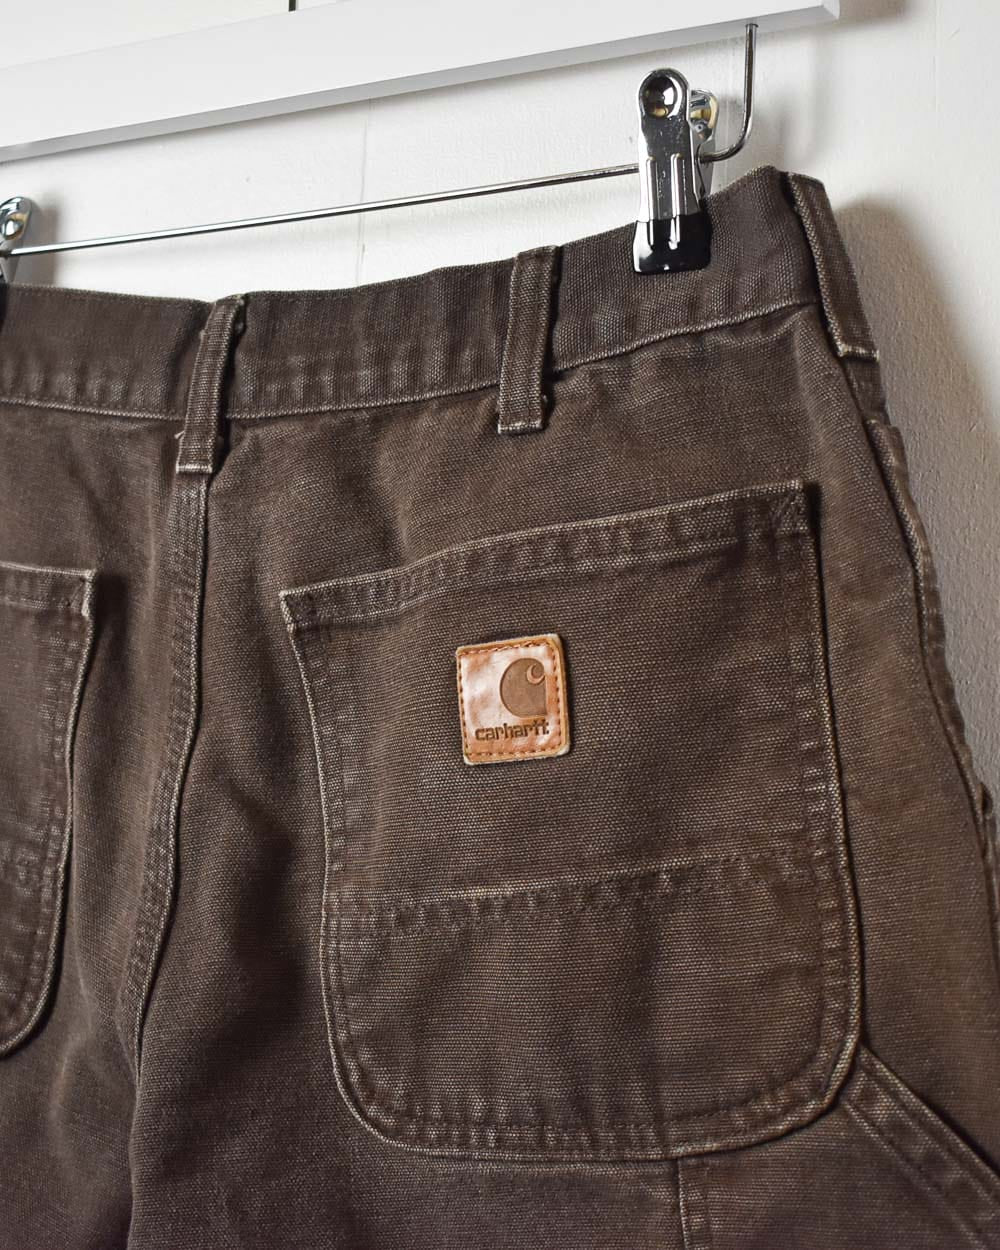 Brown Carhartt Carpenter Denim Shorts - W30 L20